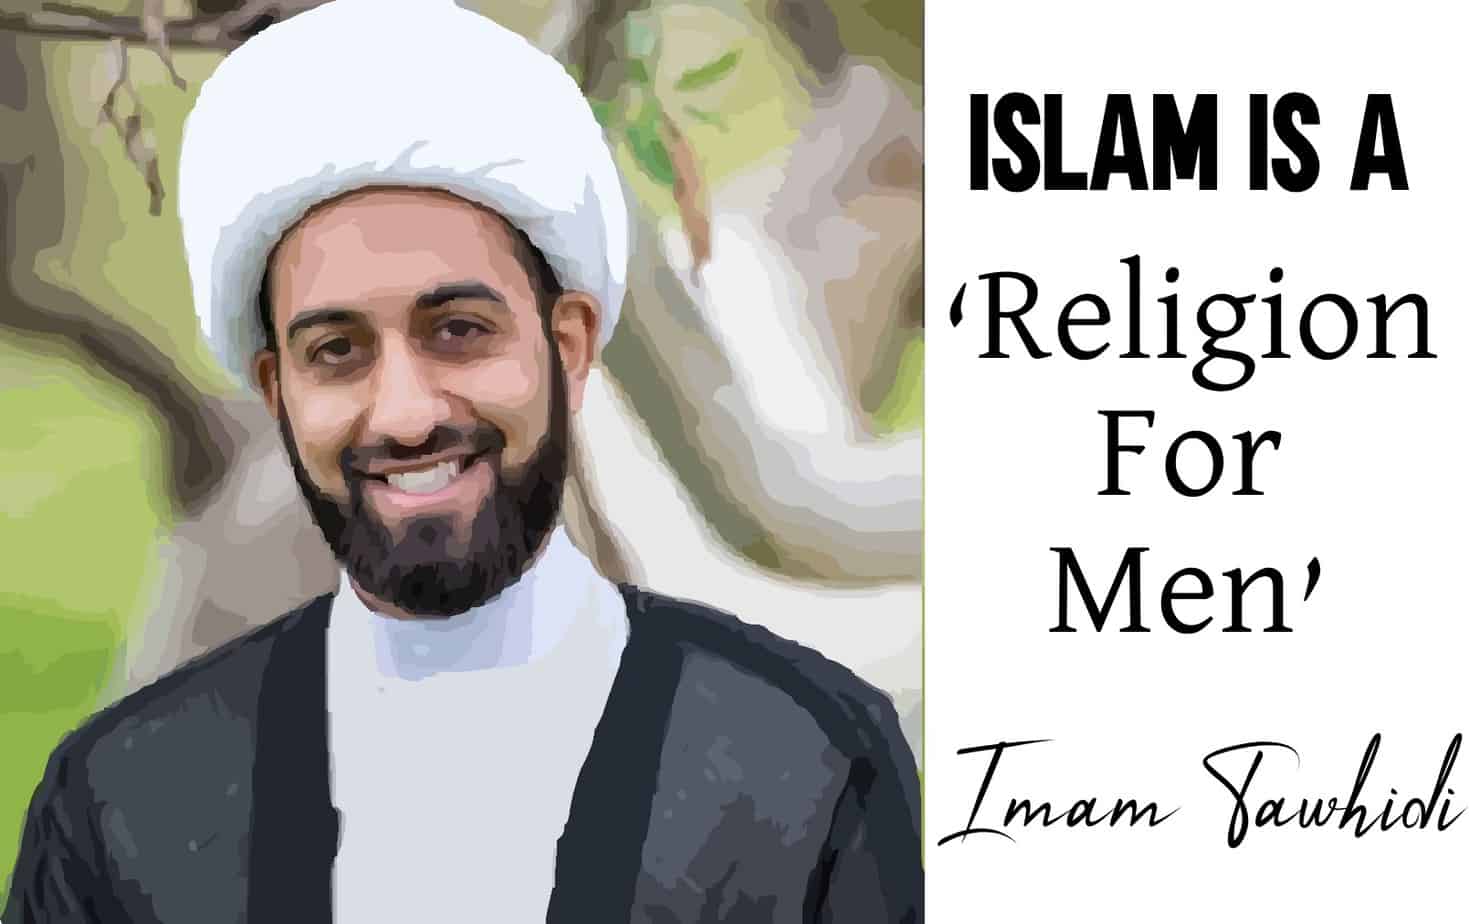 Islamic Scholar Imam Tawhidi says that Islam is a Religion for Men